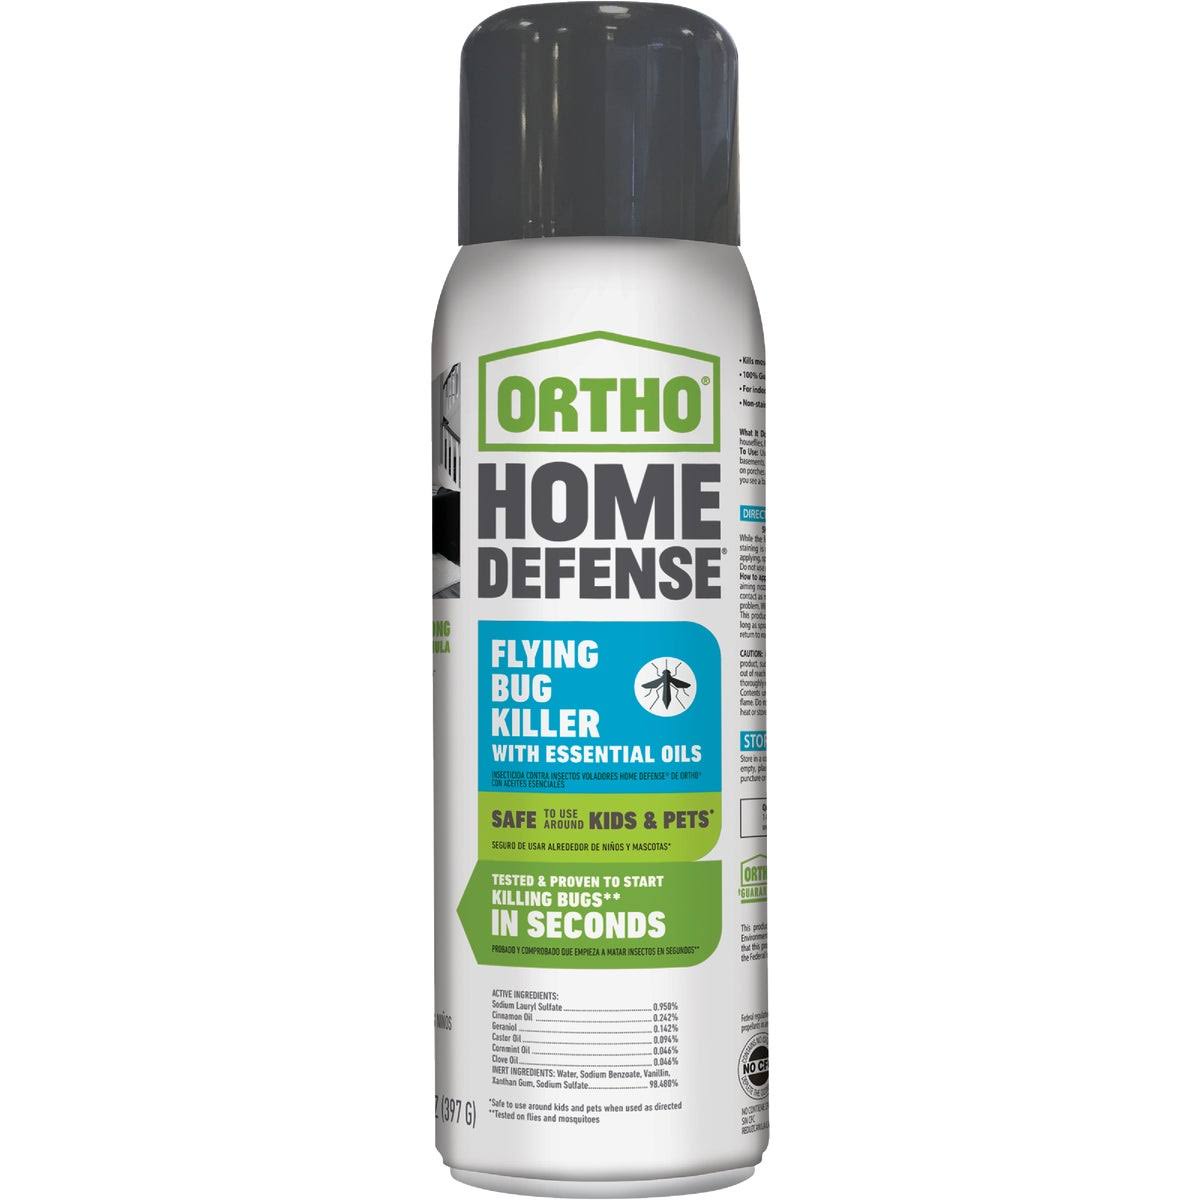 Ortho Home Defense Flying Bug Killer - with Essential Oils, 14oz